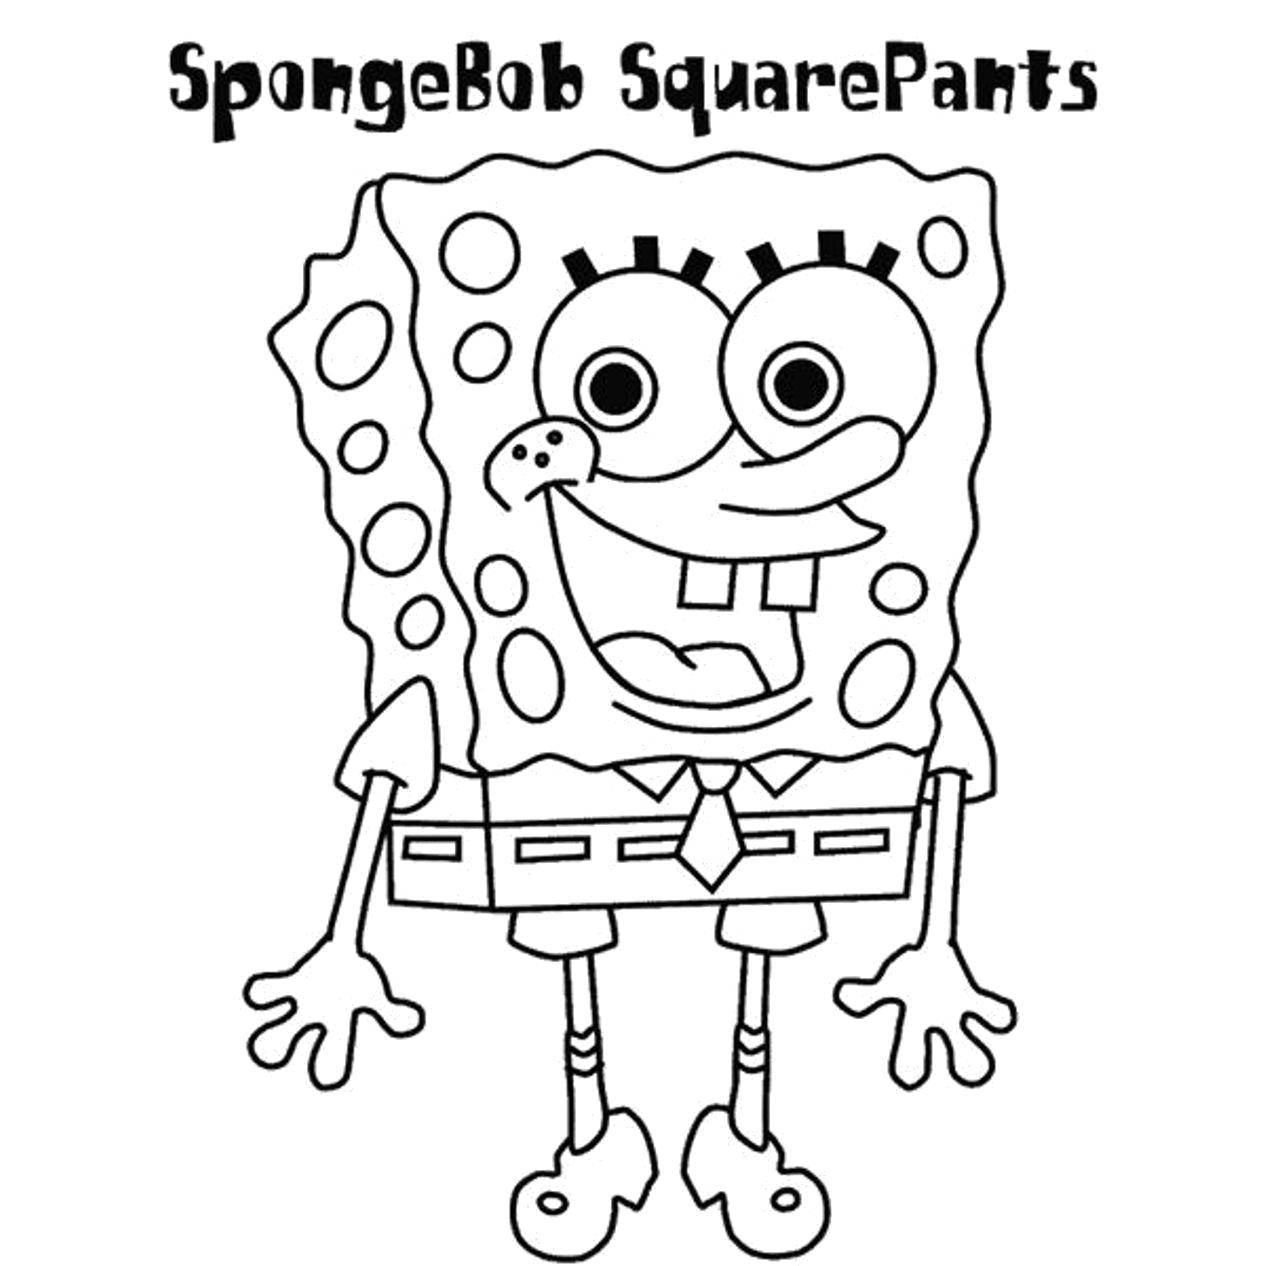 Coloring Sponge Bob square pants. Category Characters cartoon. Tags:  Cartoon character, spongebob, spongebob.